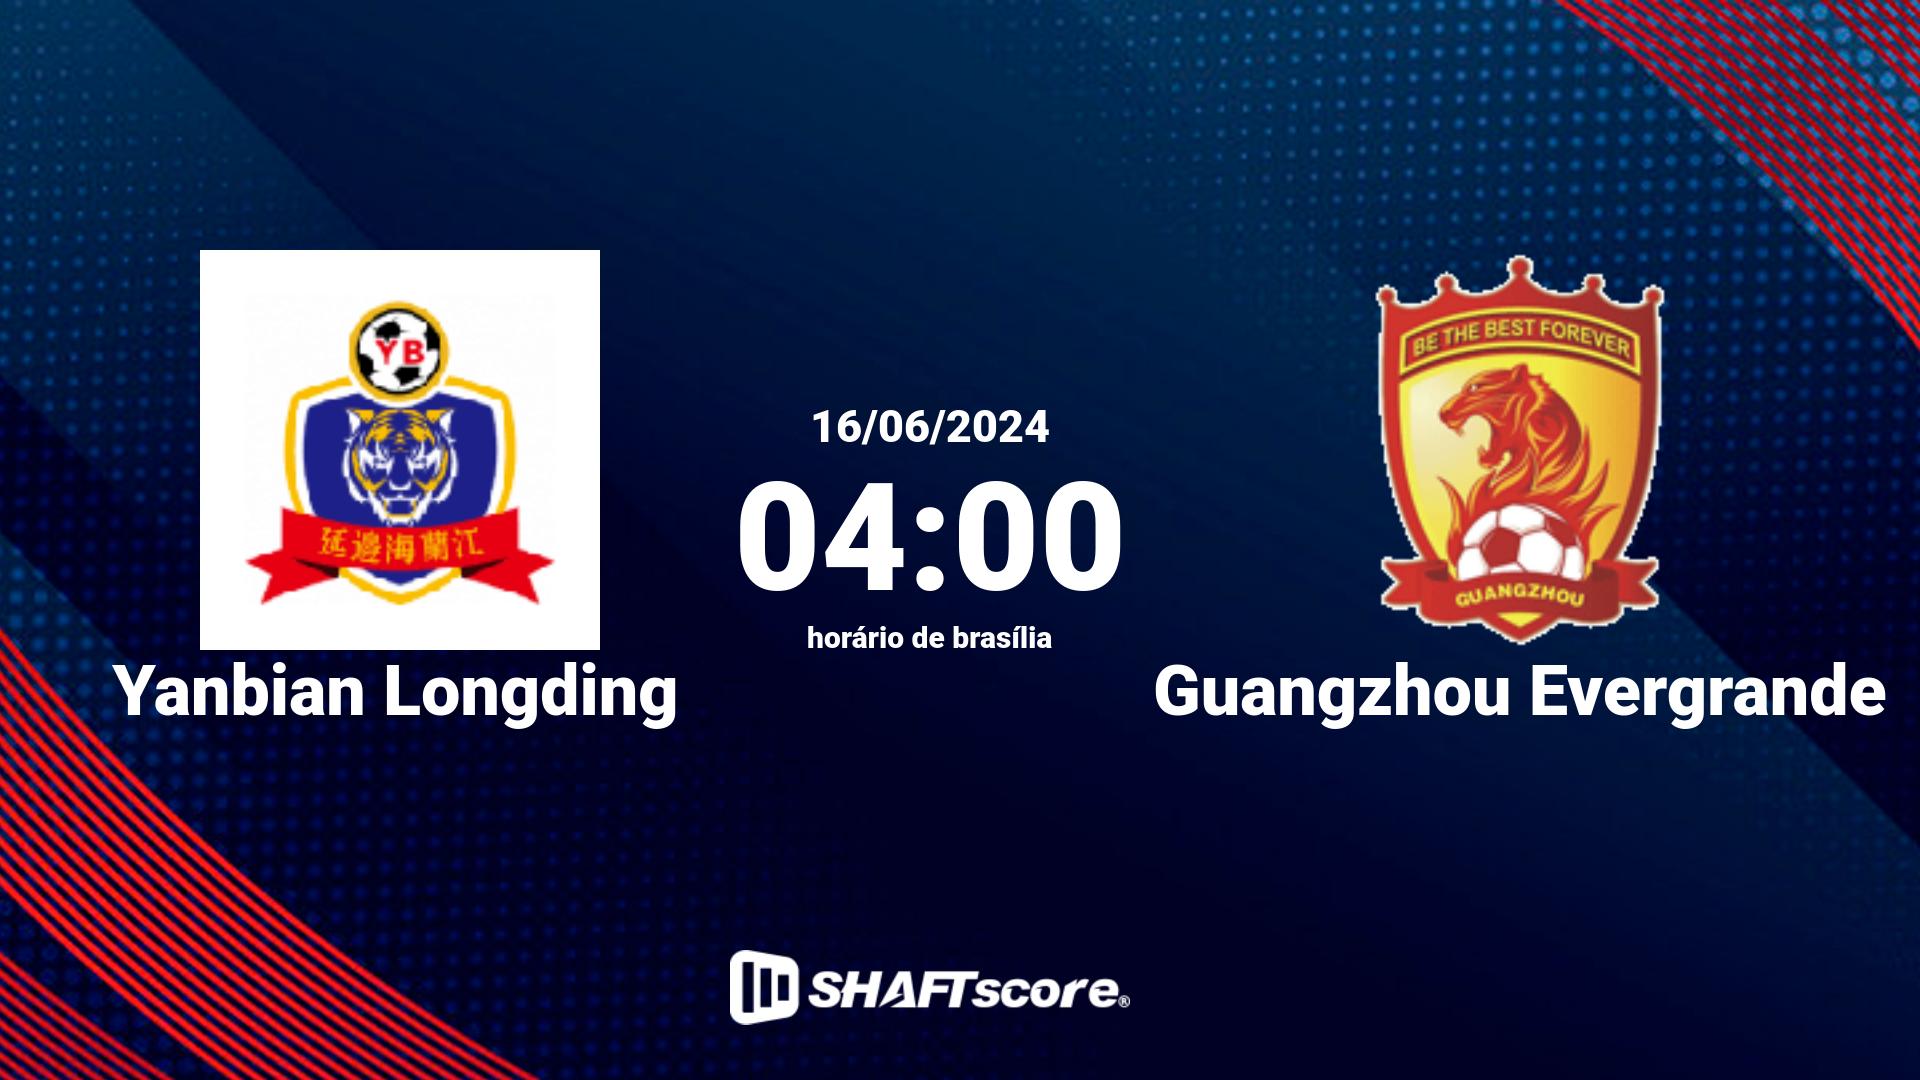 Estatísticas do jogo Yanbian Longding vs Guangzhou Evergrande 16.06 04:00